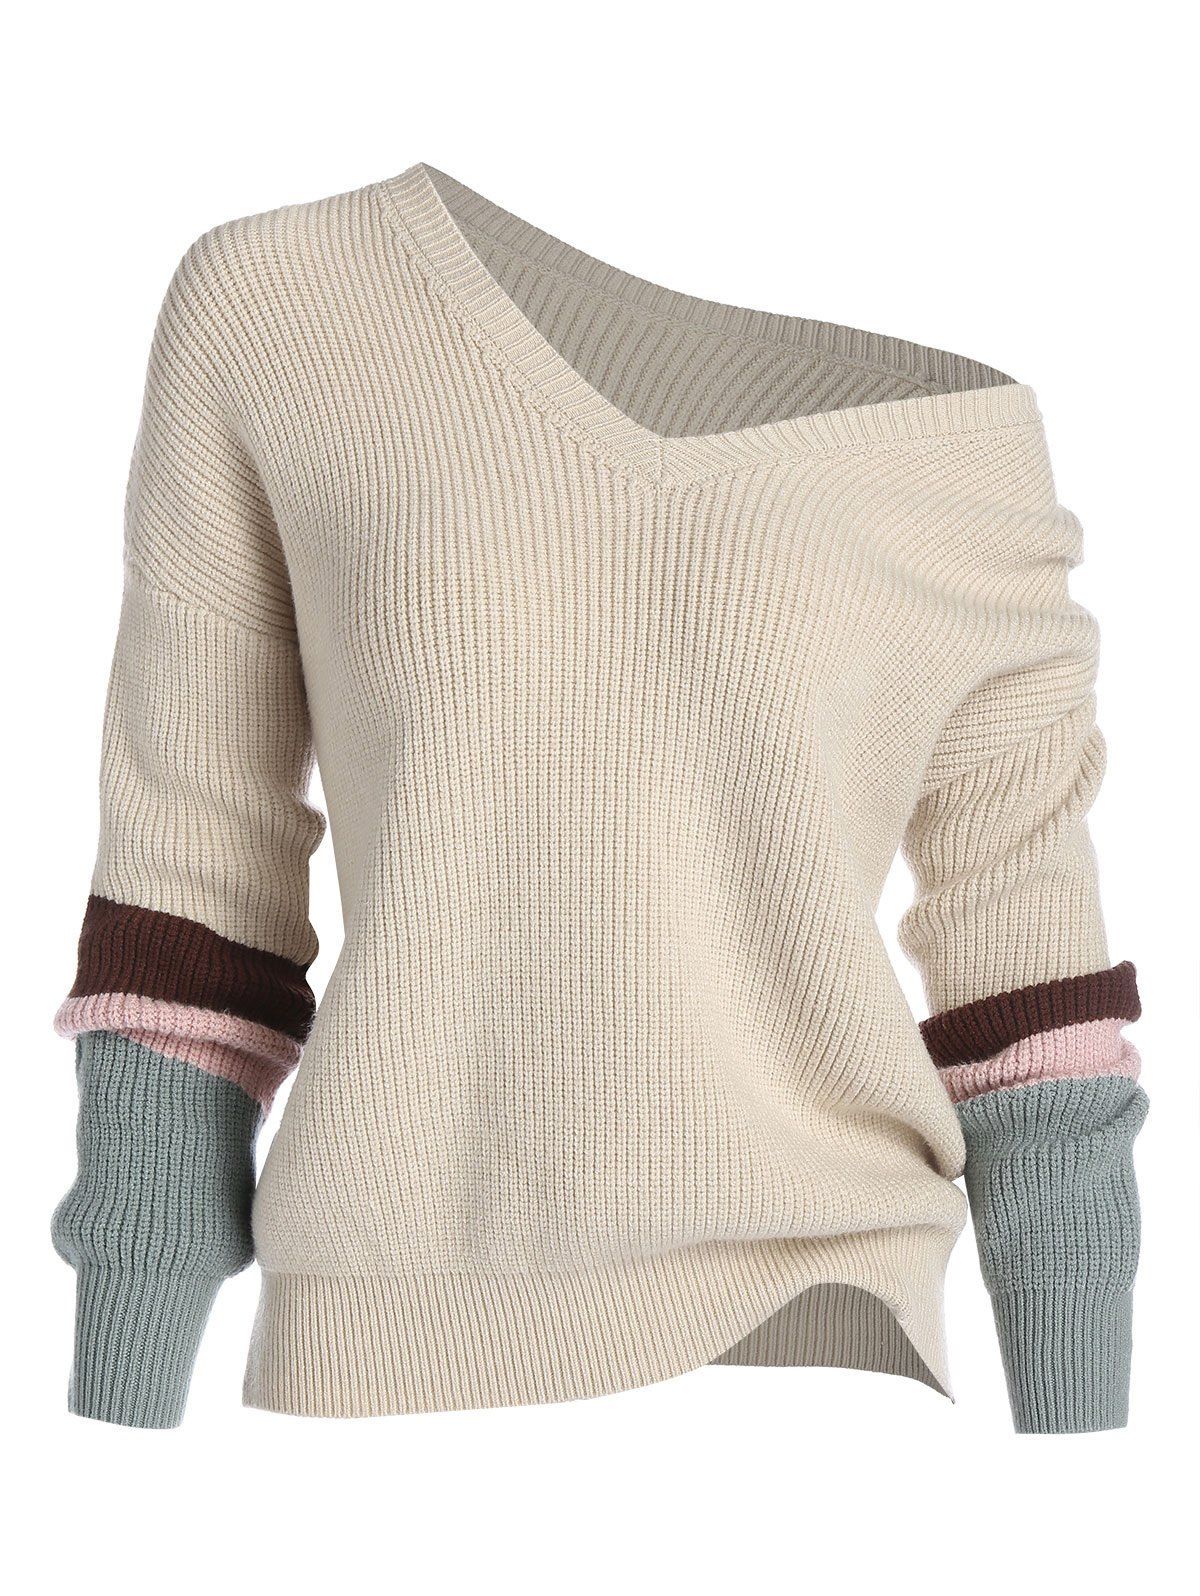 Plus Size Skew Collar Patchwork Knit Sweater - LIGHT COFFEE L